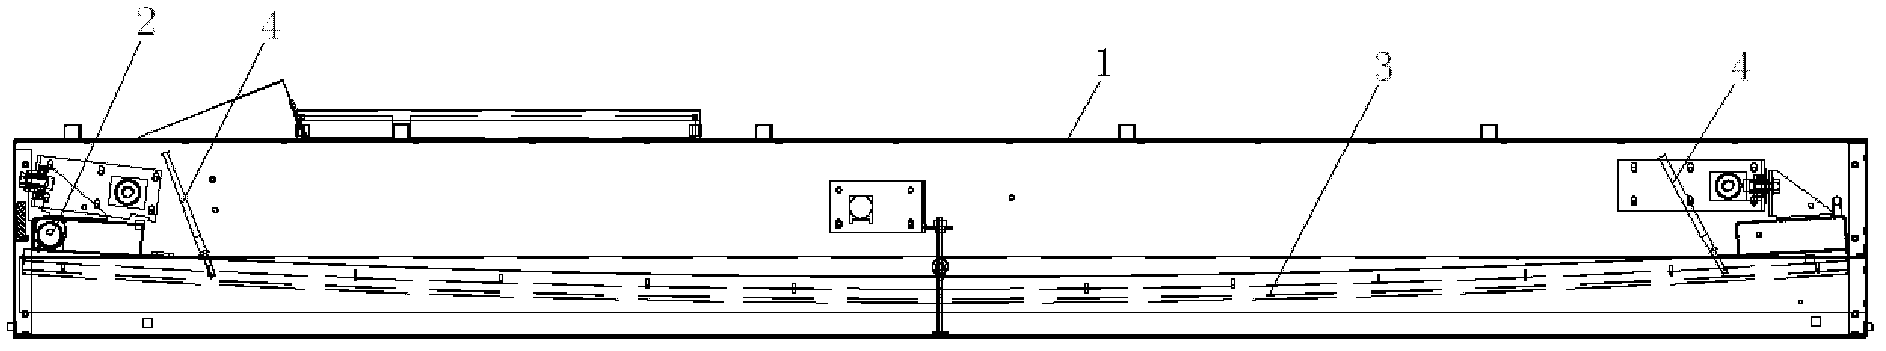 Hot-rail deformation hot box